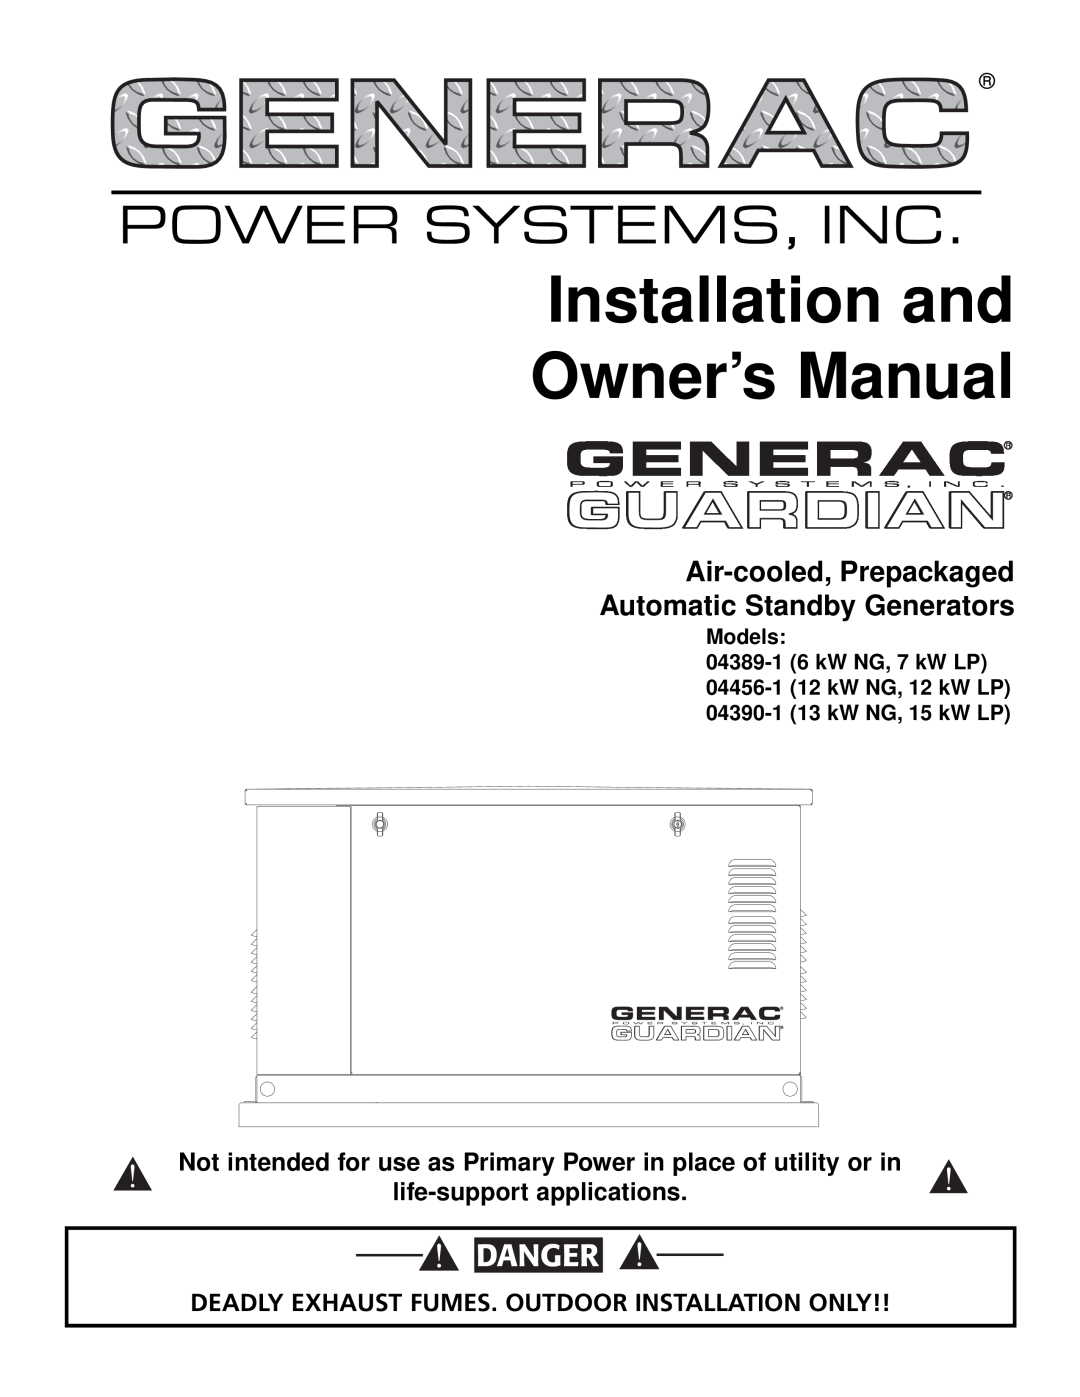 Generac 04389-1, 04456-1, 04390-1 owner manual Power Systems, Inc, Danger, Air-cooled,Prepackaged, Generac R 